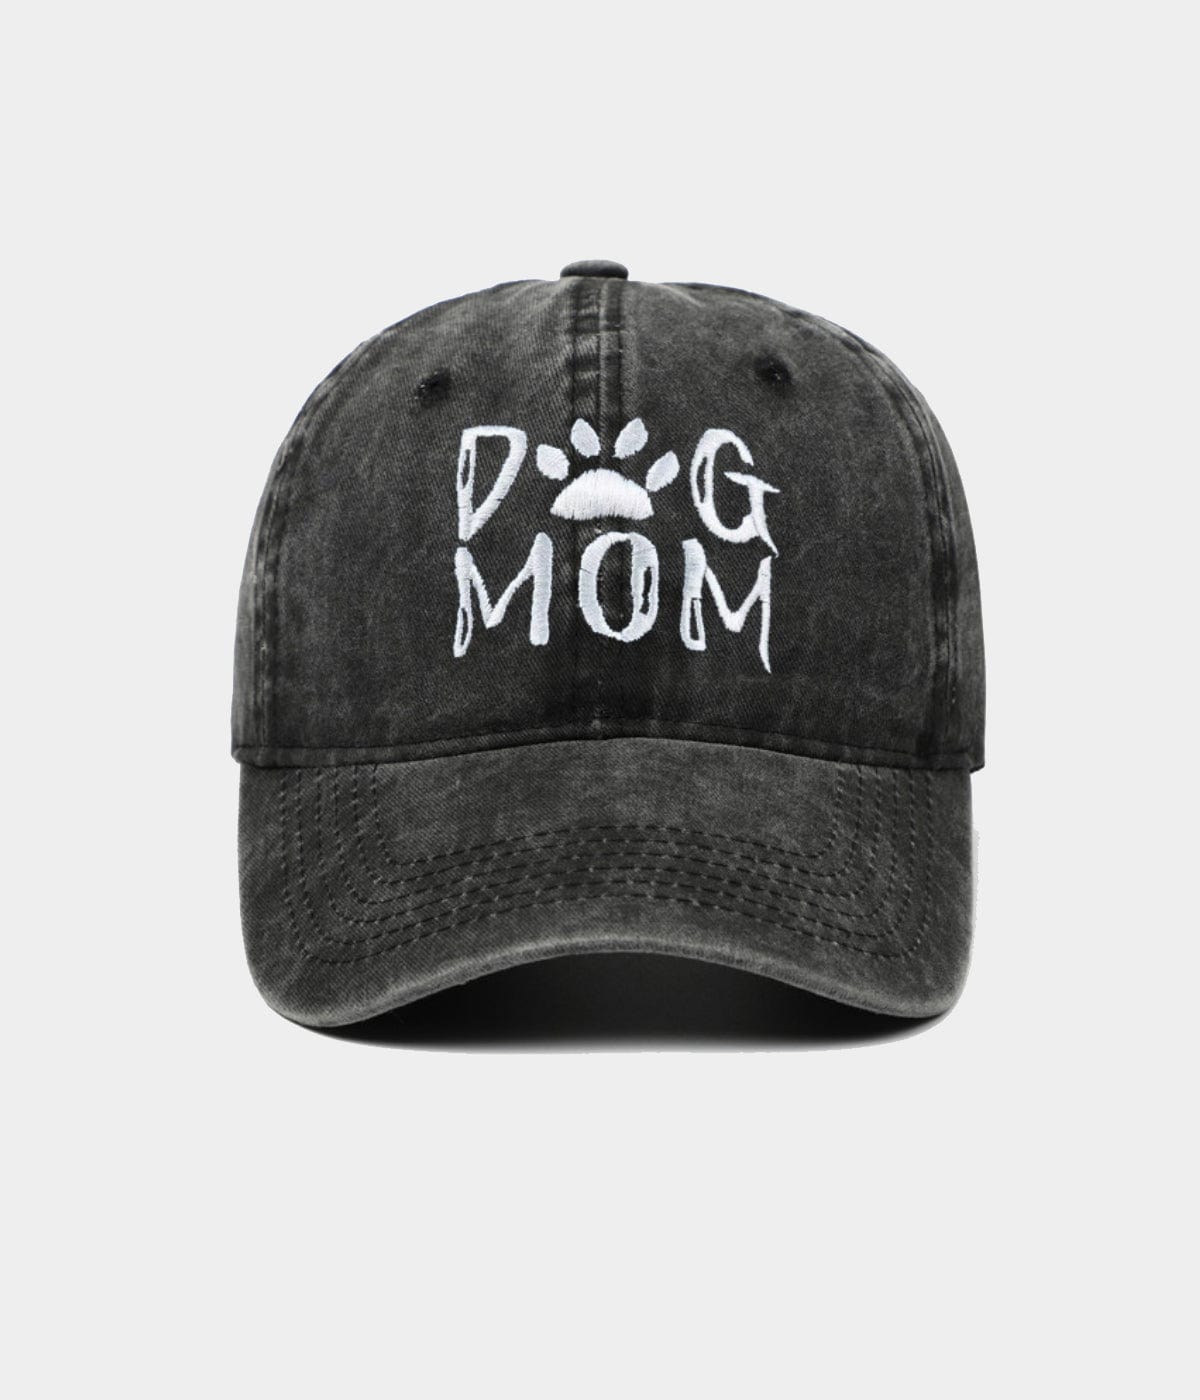 DOG MOM.